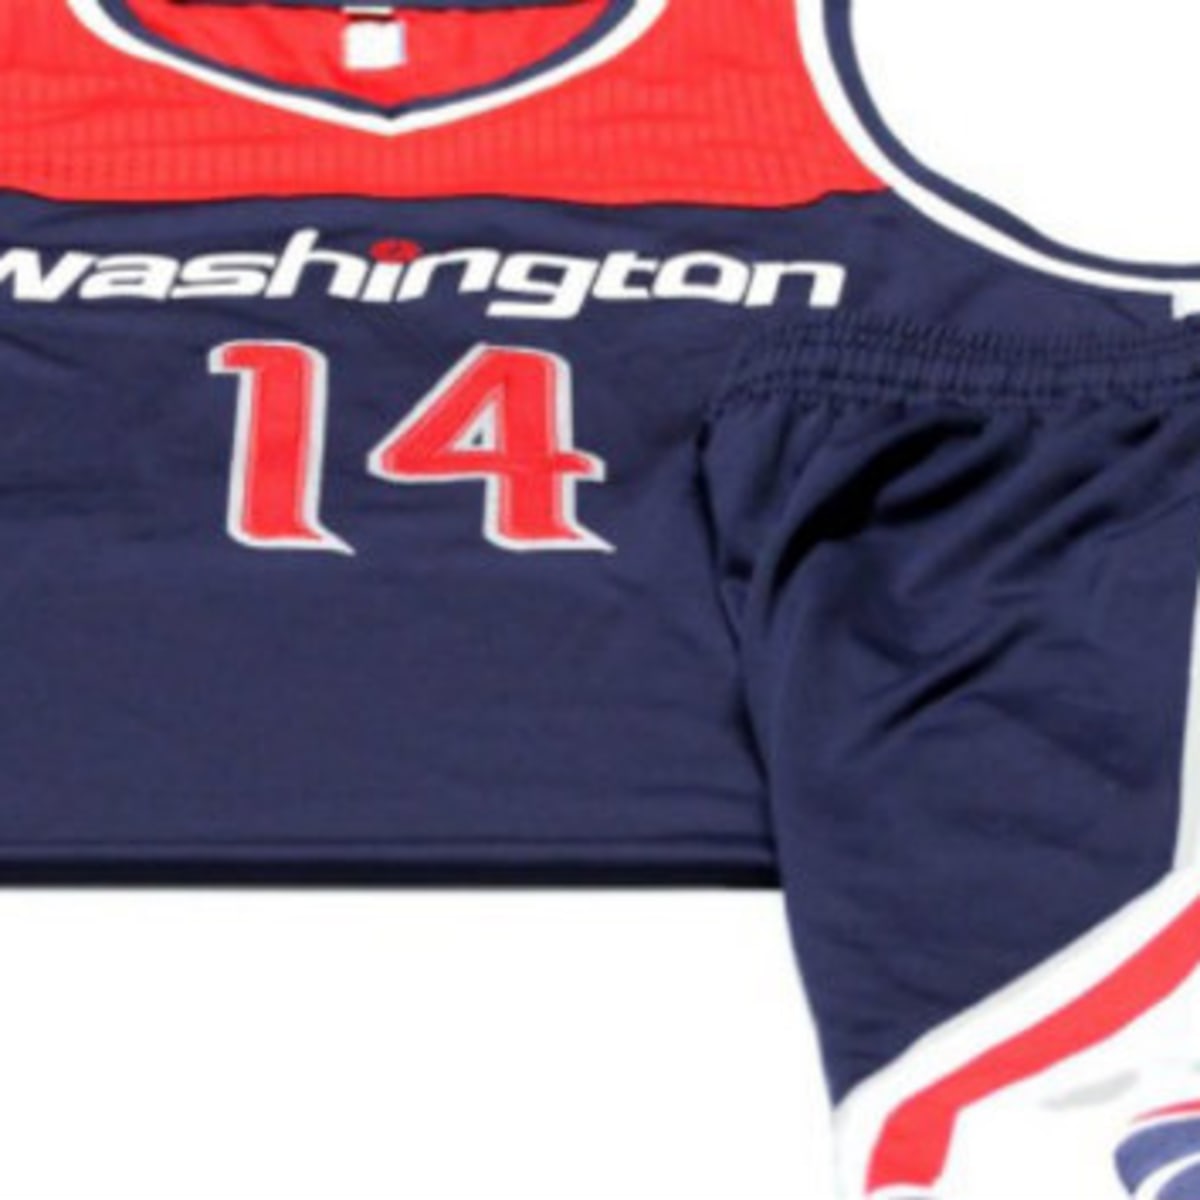 Washington Wizards unveil new alternate uniforms - Sports Illustrated